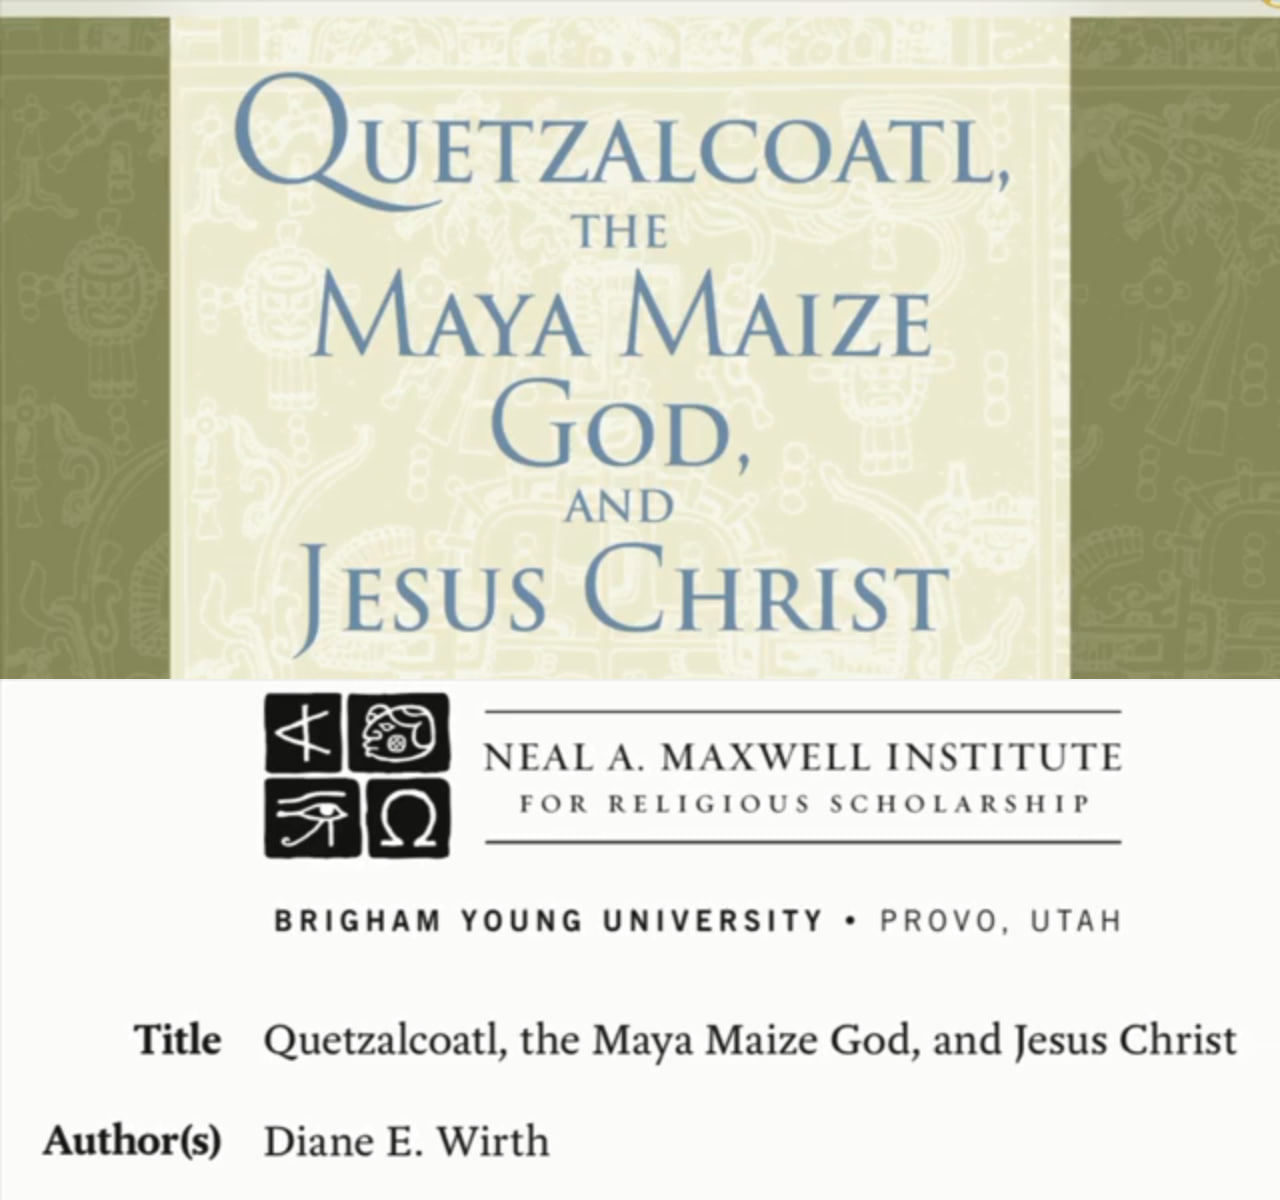 Quetzalcoatl, the Maya Maize God, and Jesus Christ